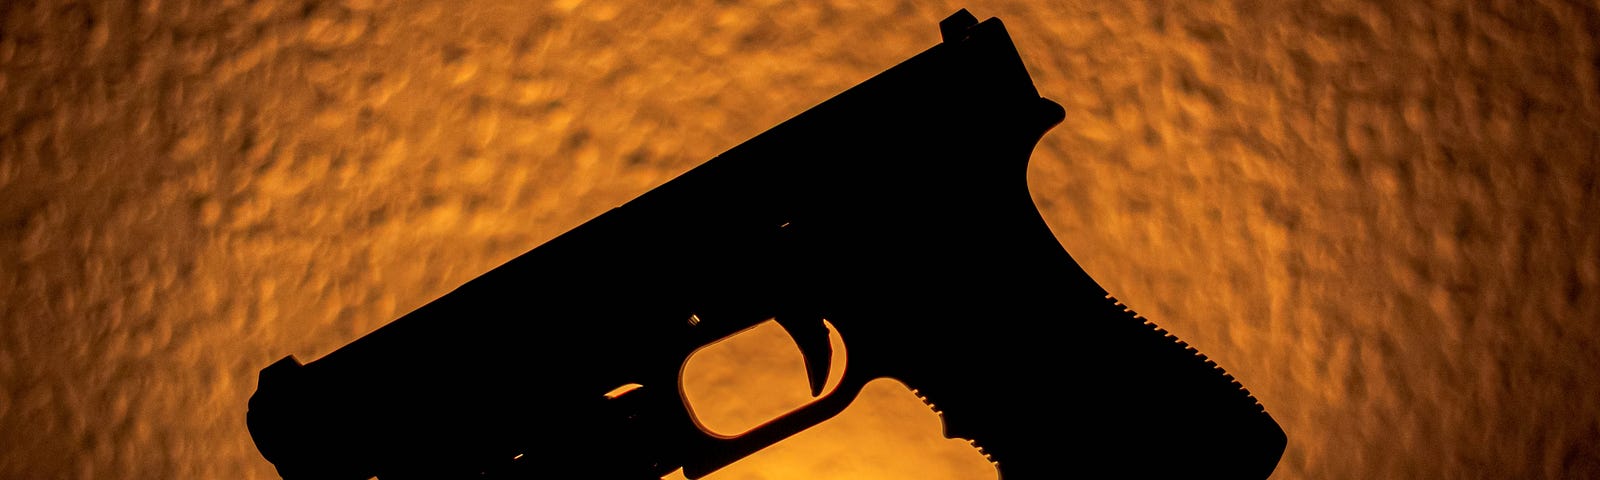 The silhouette of a handgun against an orange background.